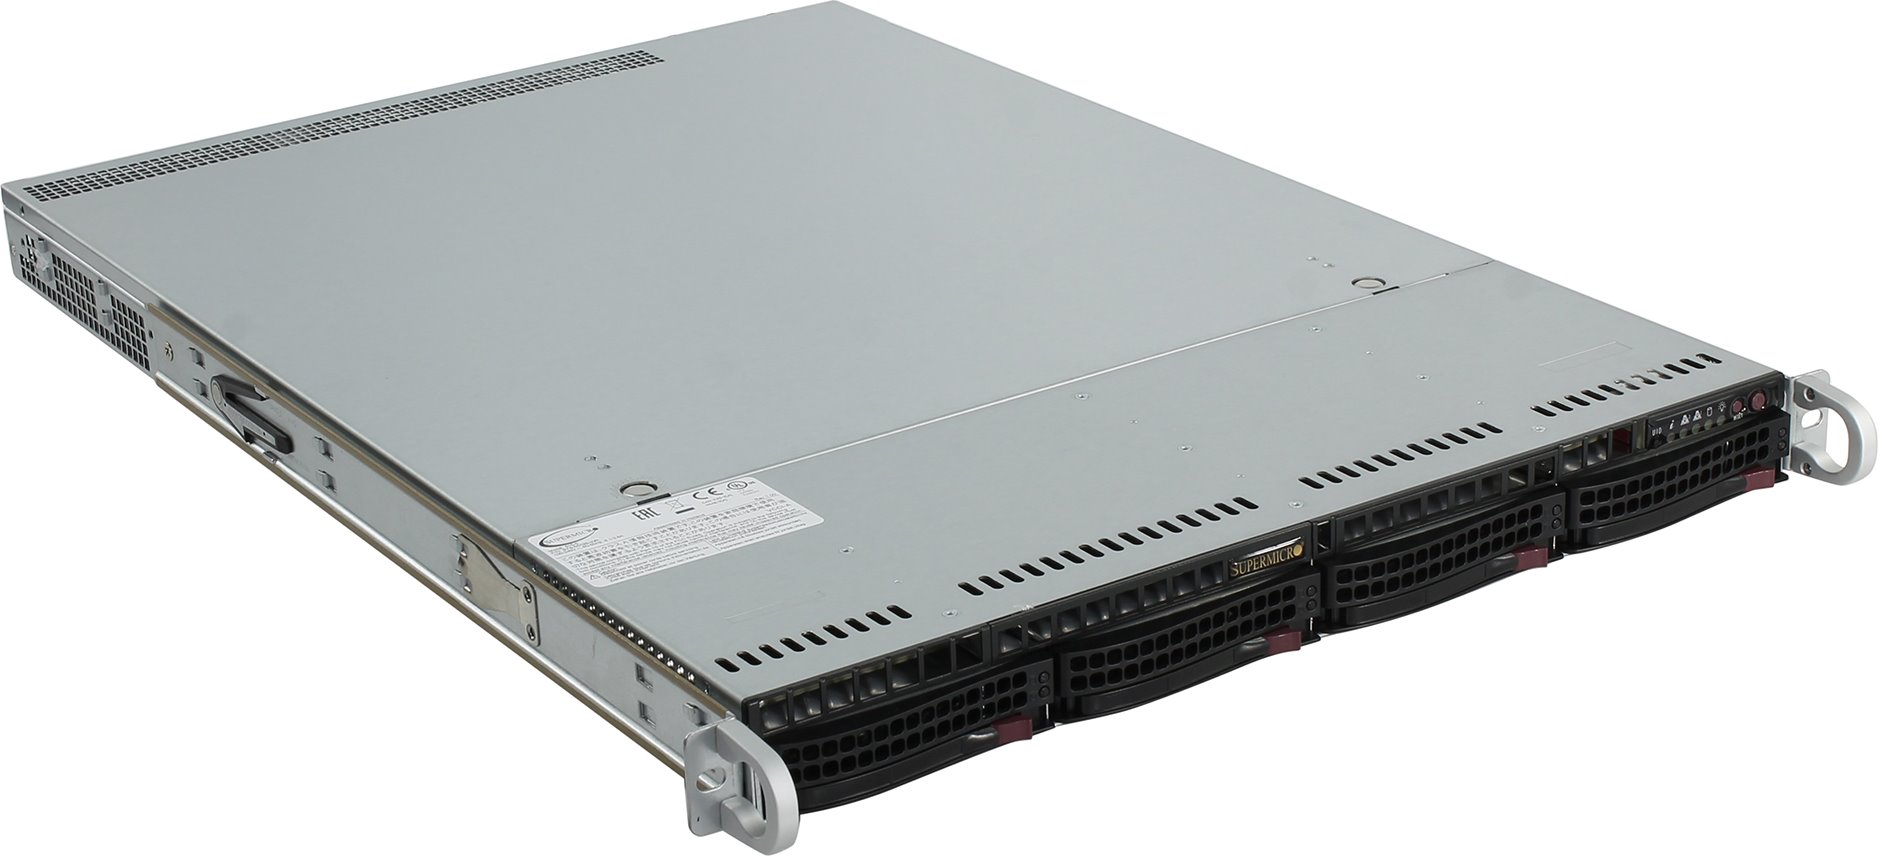 Платформа Supermicro SuperServer 1U 5019P-WTR noCPU(1)Scalable/TDP 70-205W/ no DIMM(6)/ SATARAID HDD(4)LFF/ 2x10GbE/ 2xFH, 1xLP, M2/ 2x500W